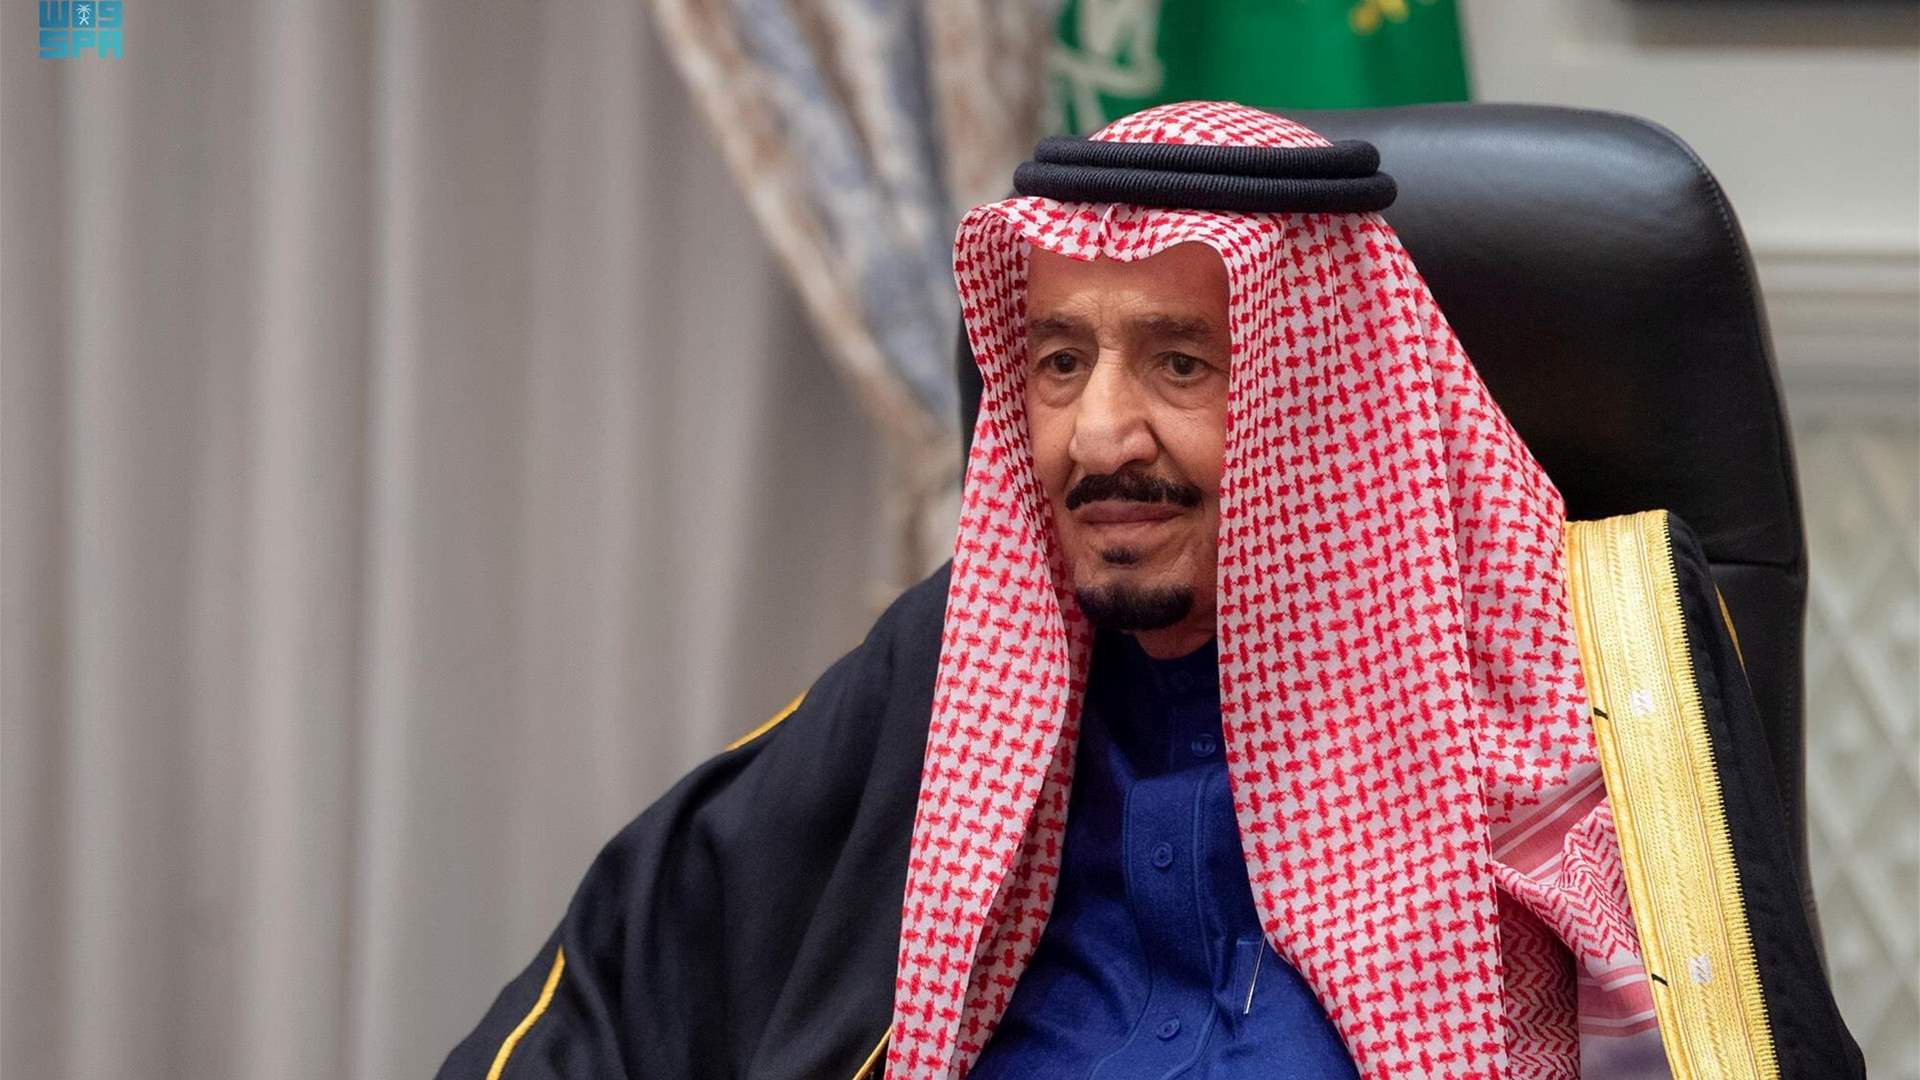 Saudi King Salman exits hospital after medical checks - state TV